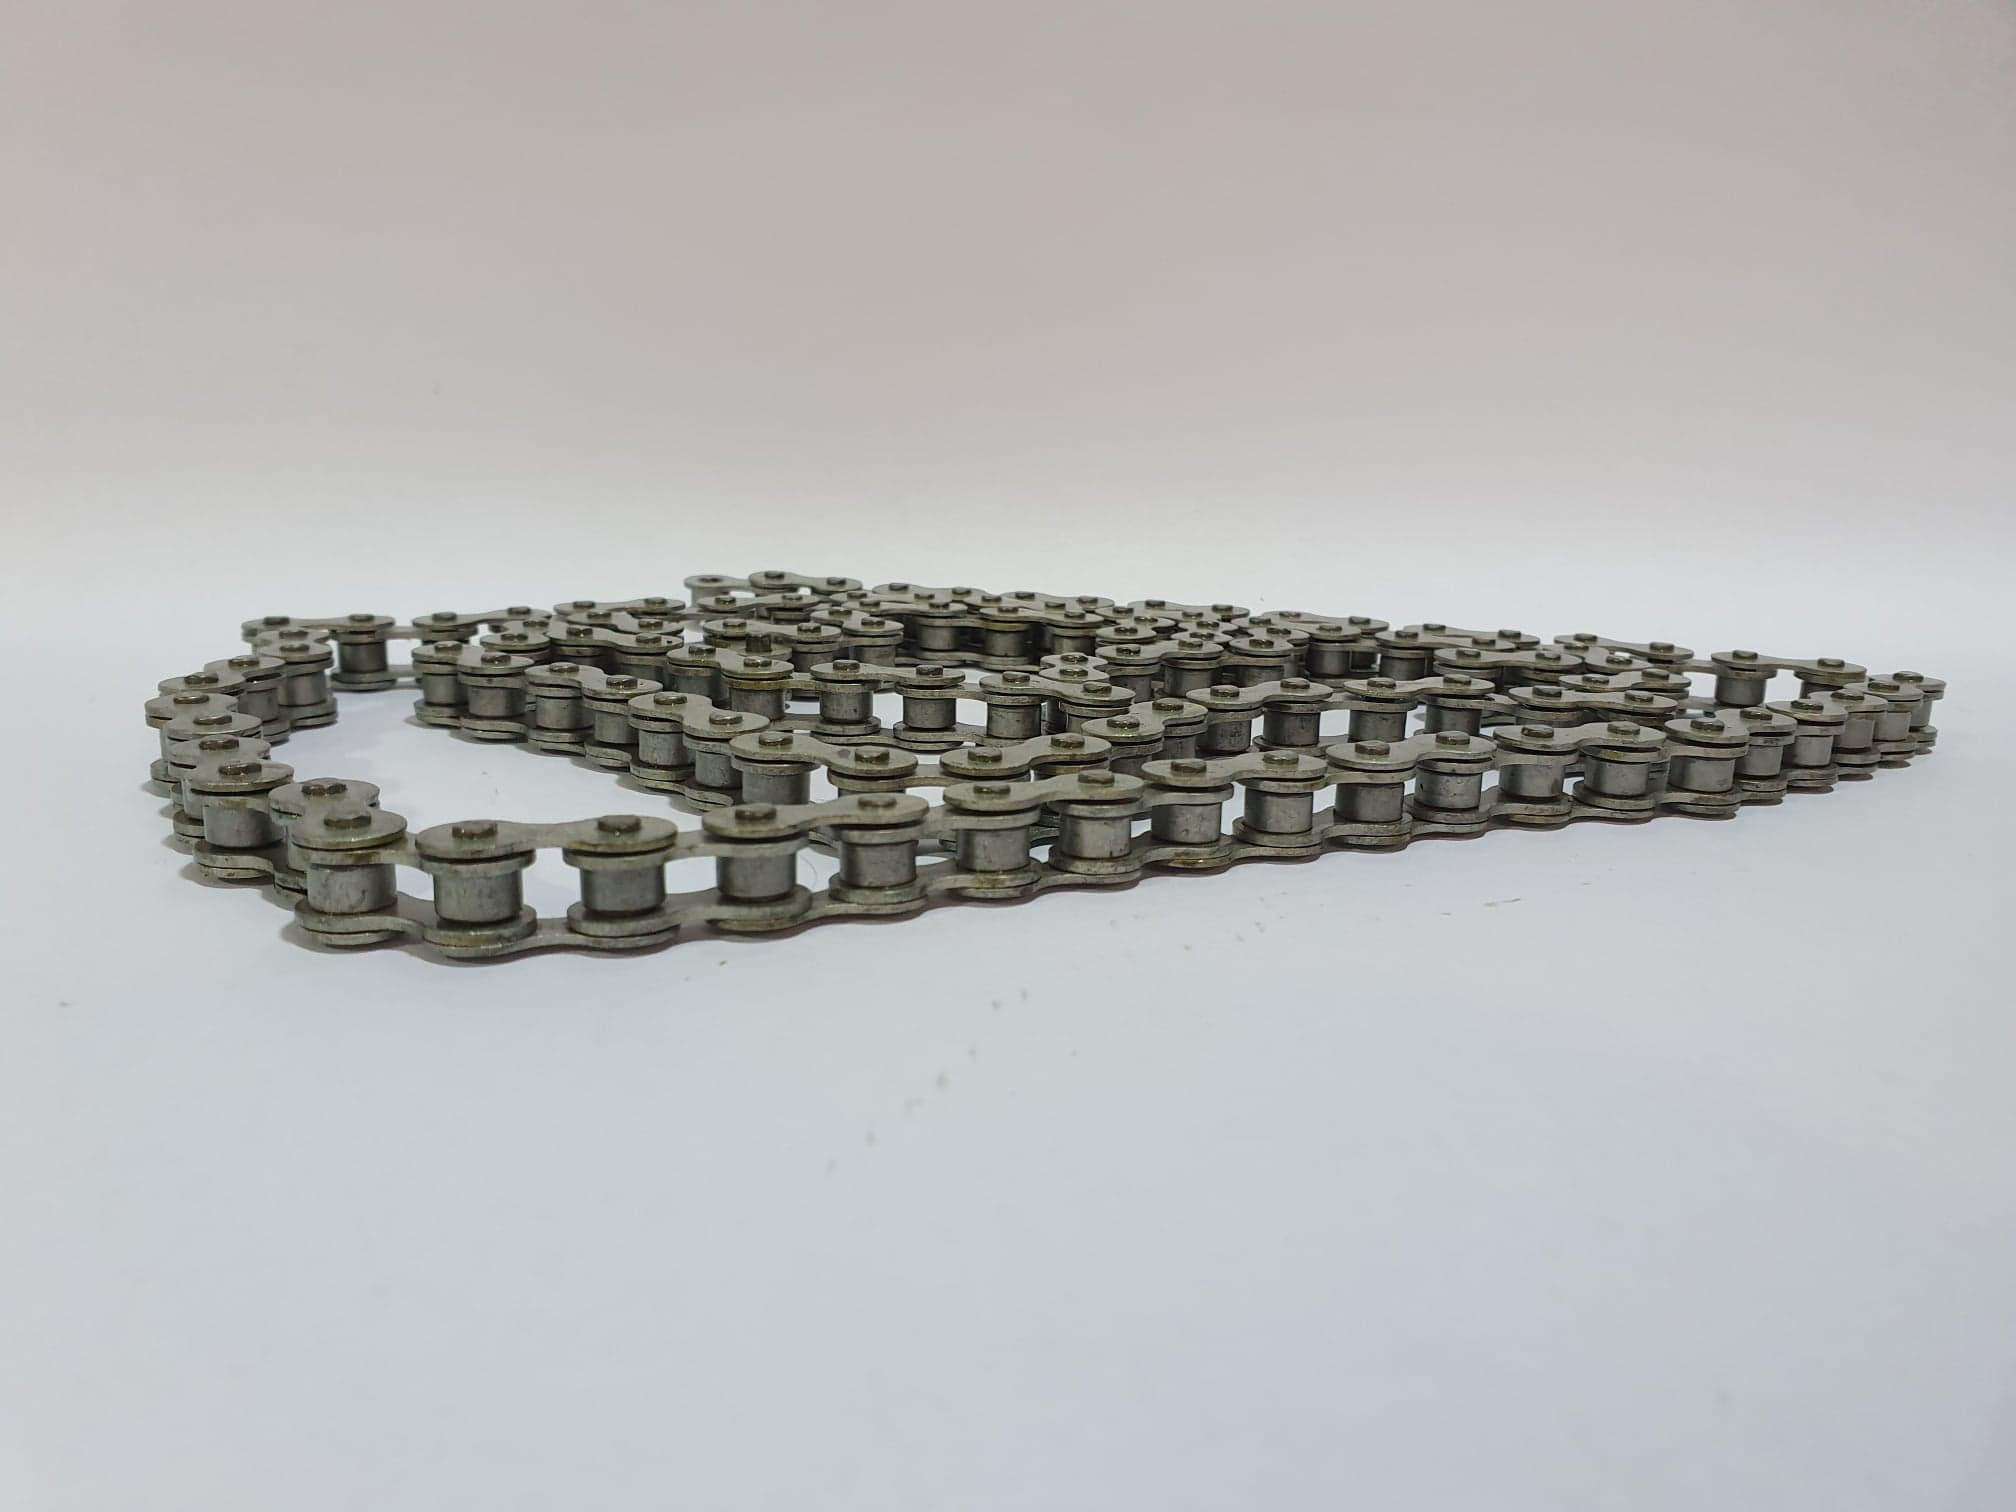 Hose Reel Chain